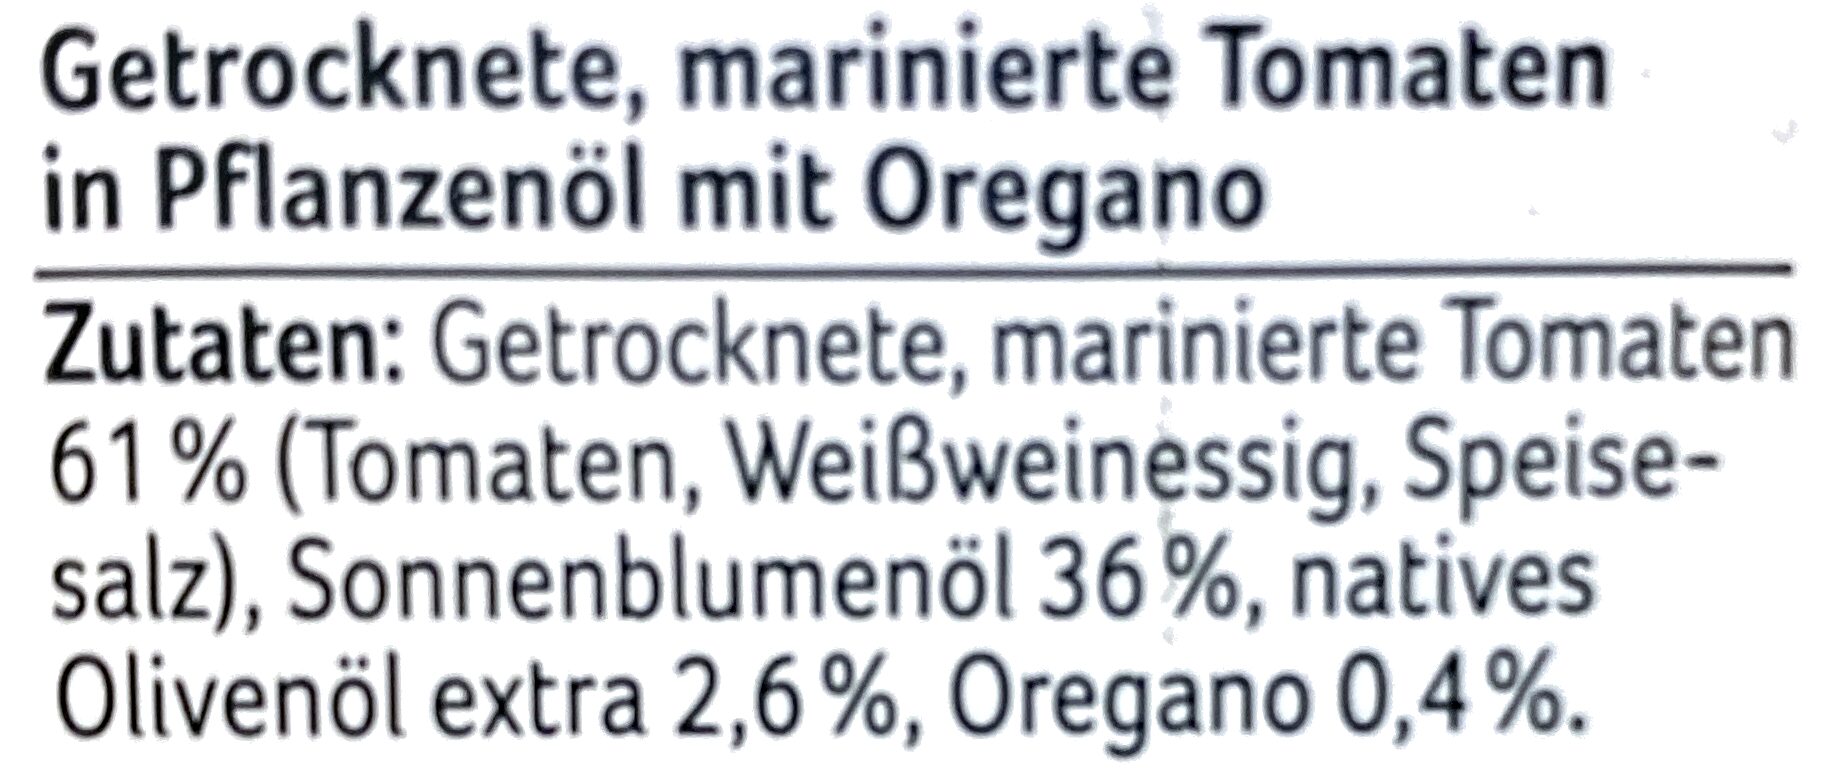 Getrocknete Tomaten in Öl mit Oregano - Ingredients - de